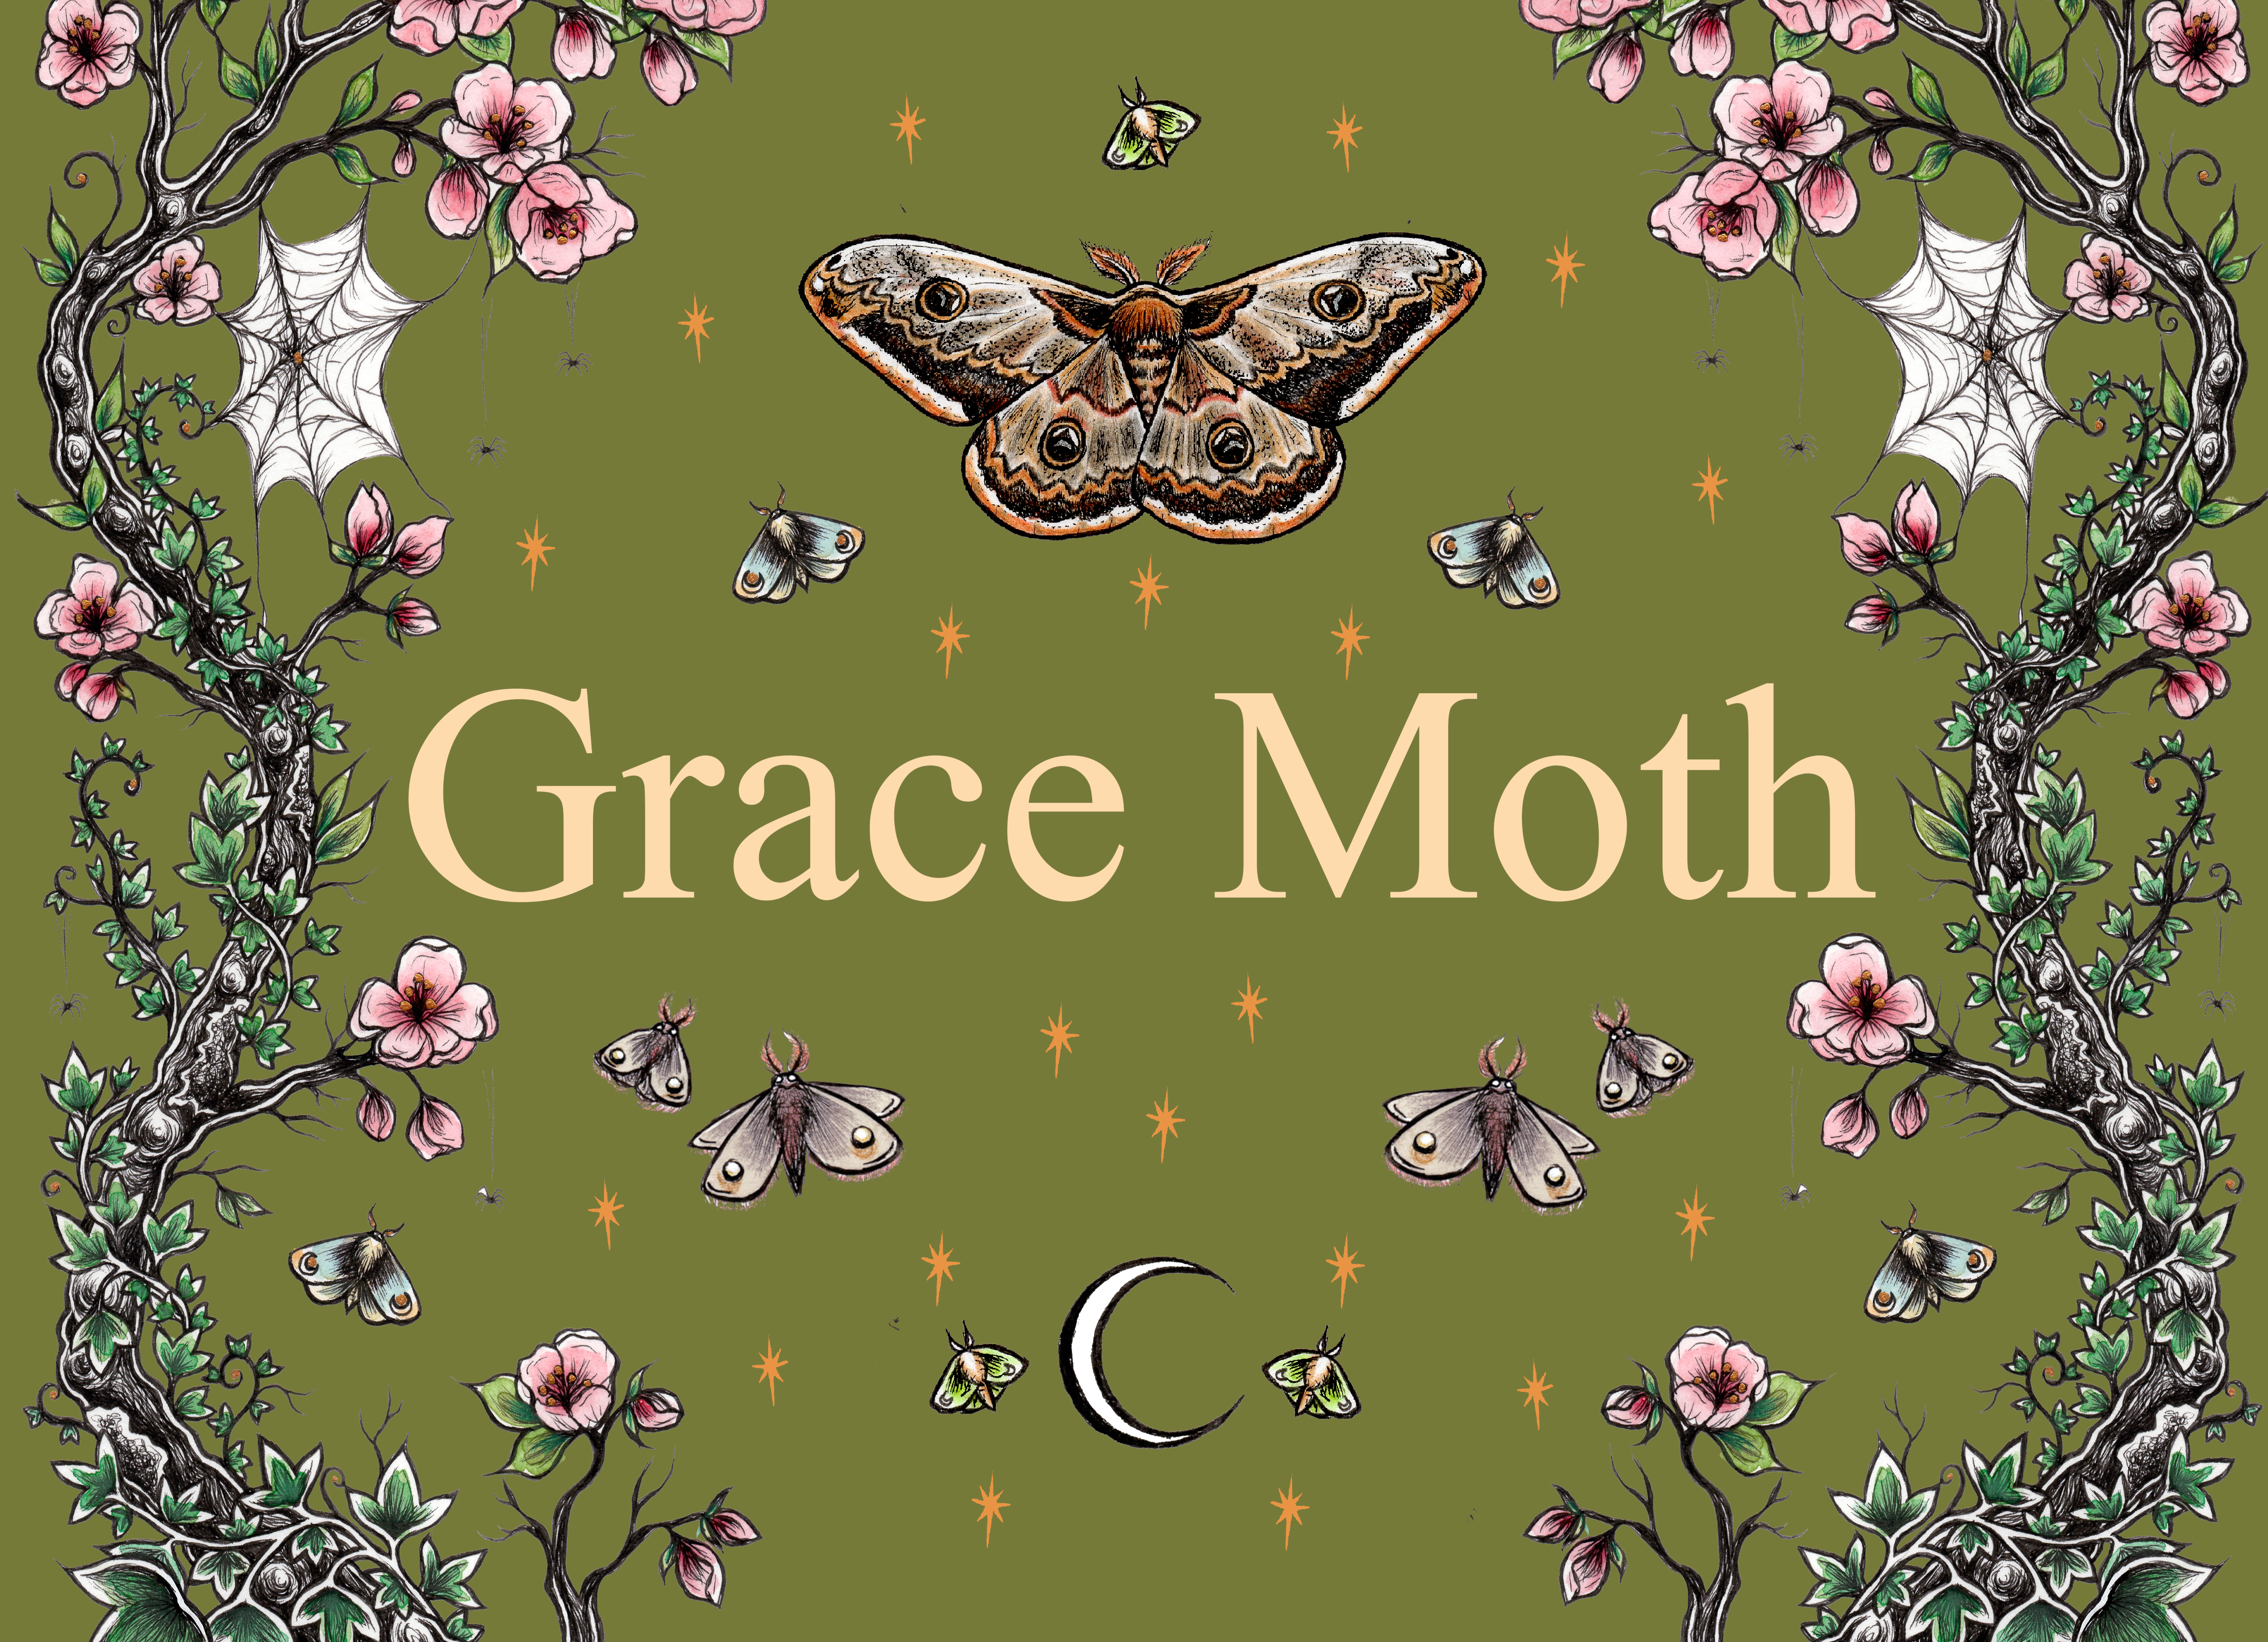 Grace Moth